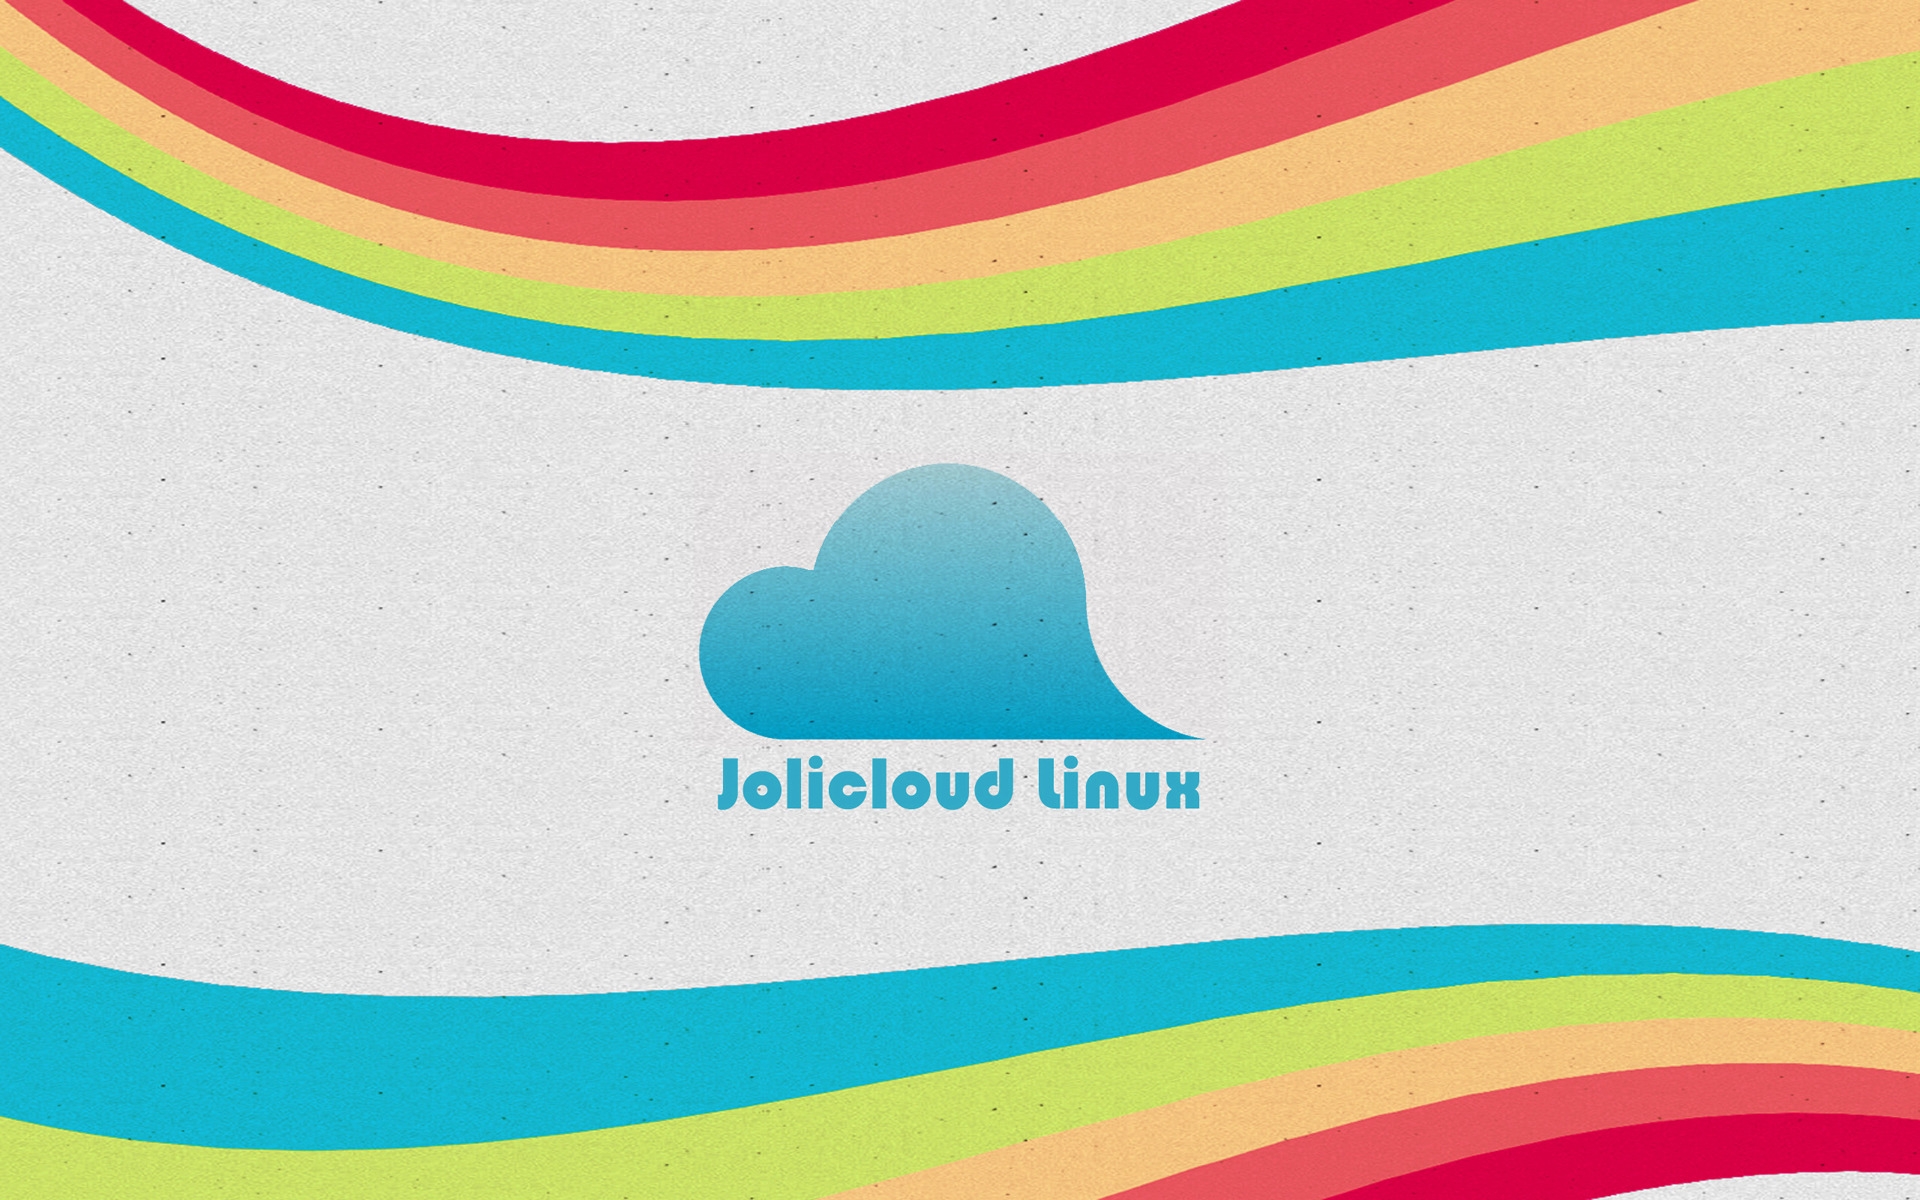 Jolicloud Linux for 1920 x 1200 widescreen resolution